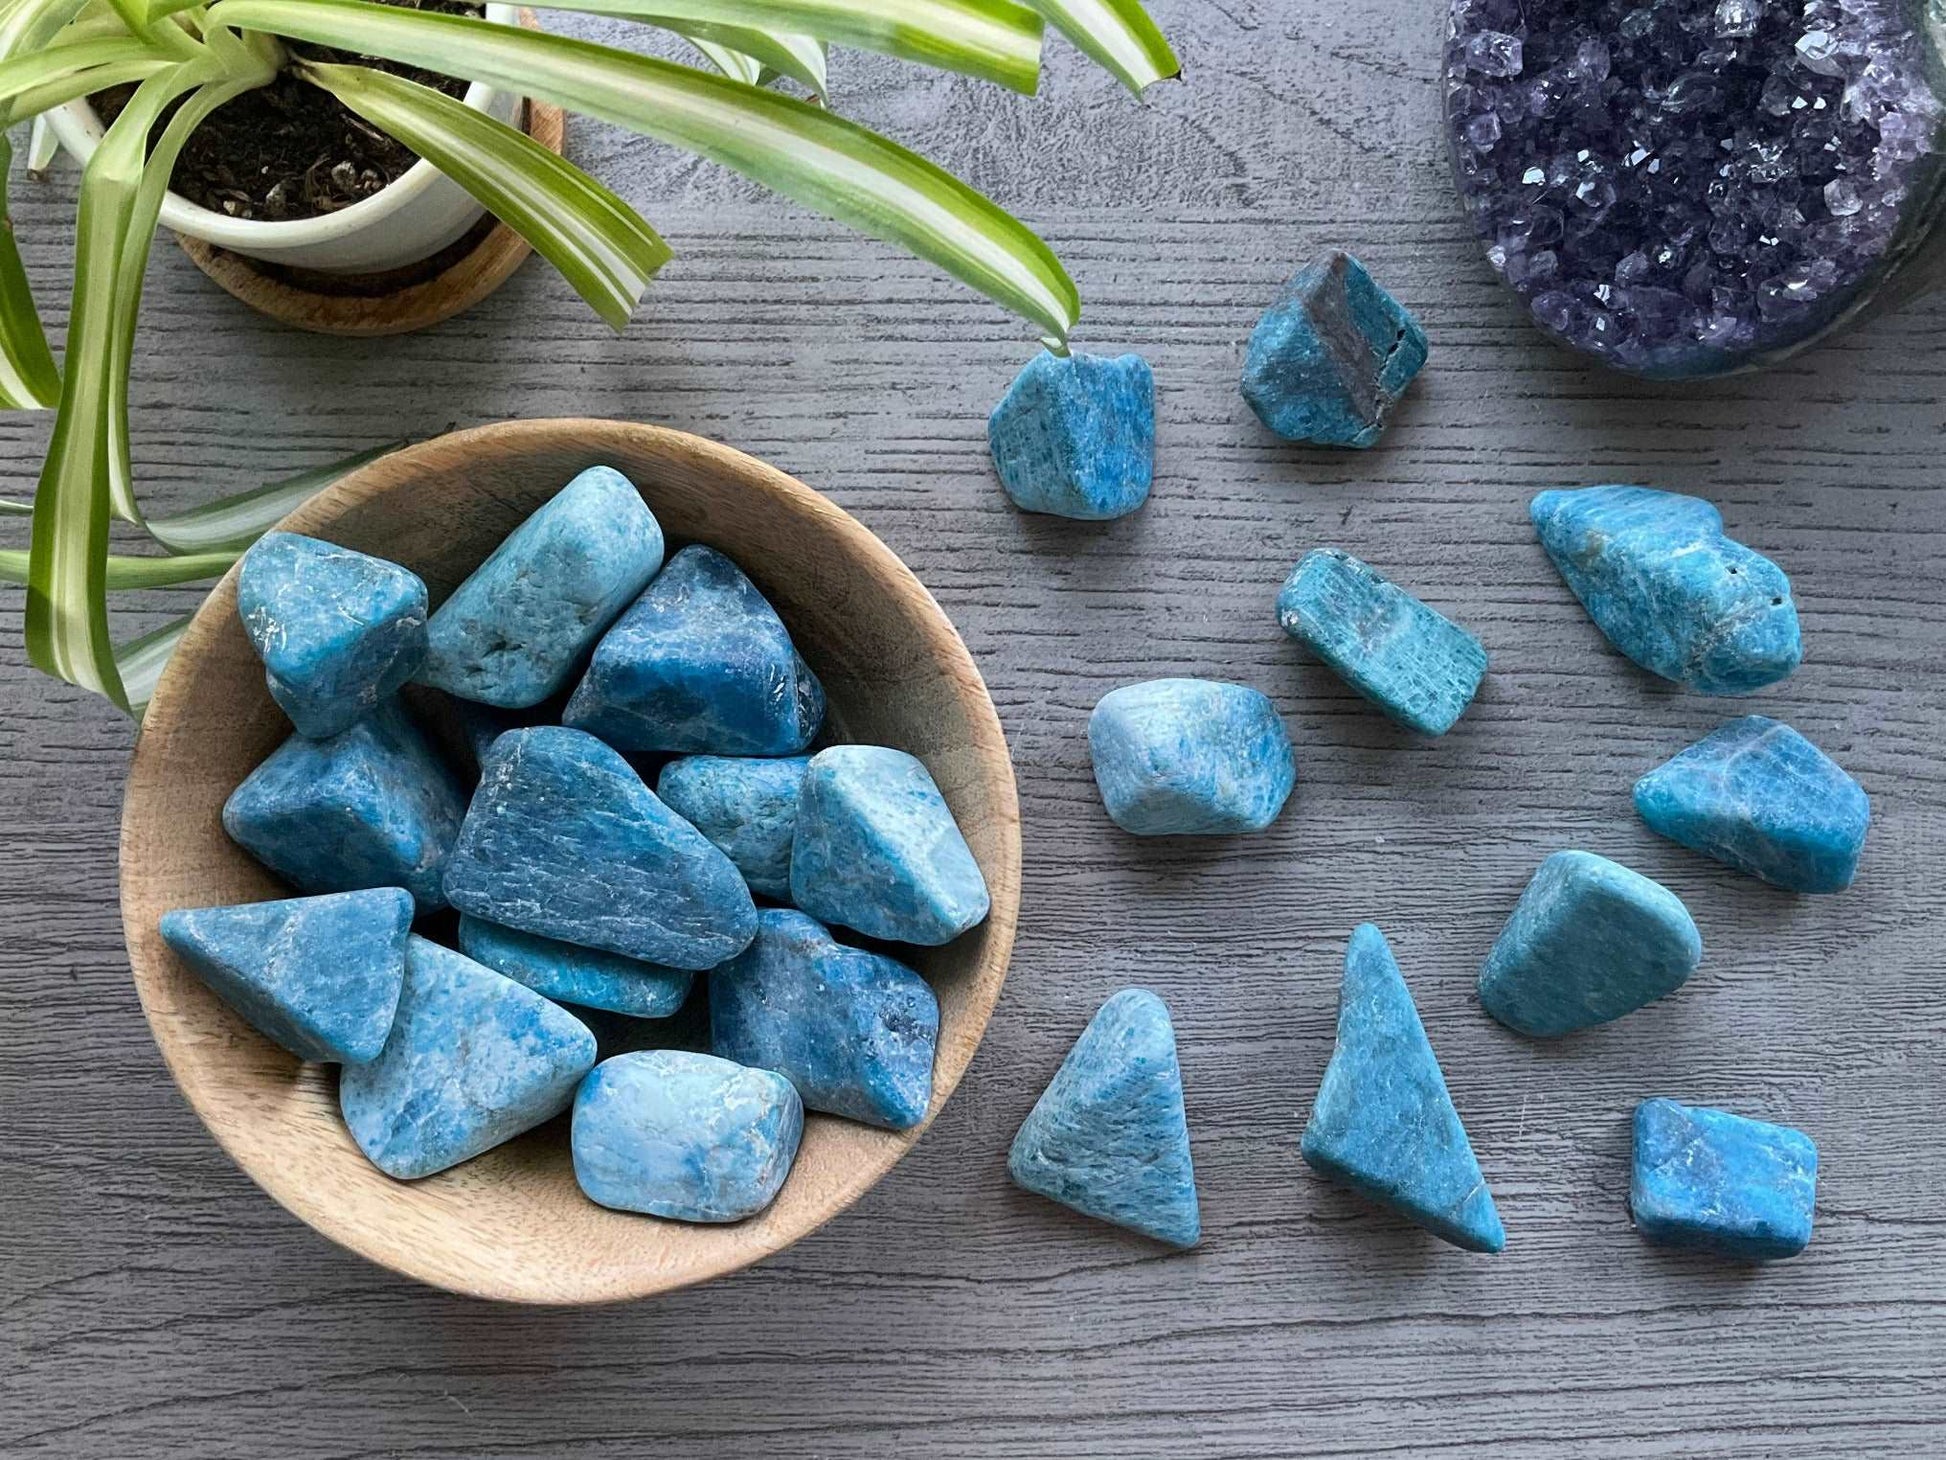 Pictured are various blue apatite tumbled stones.